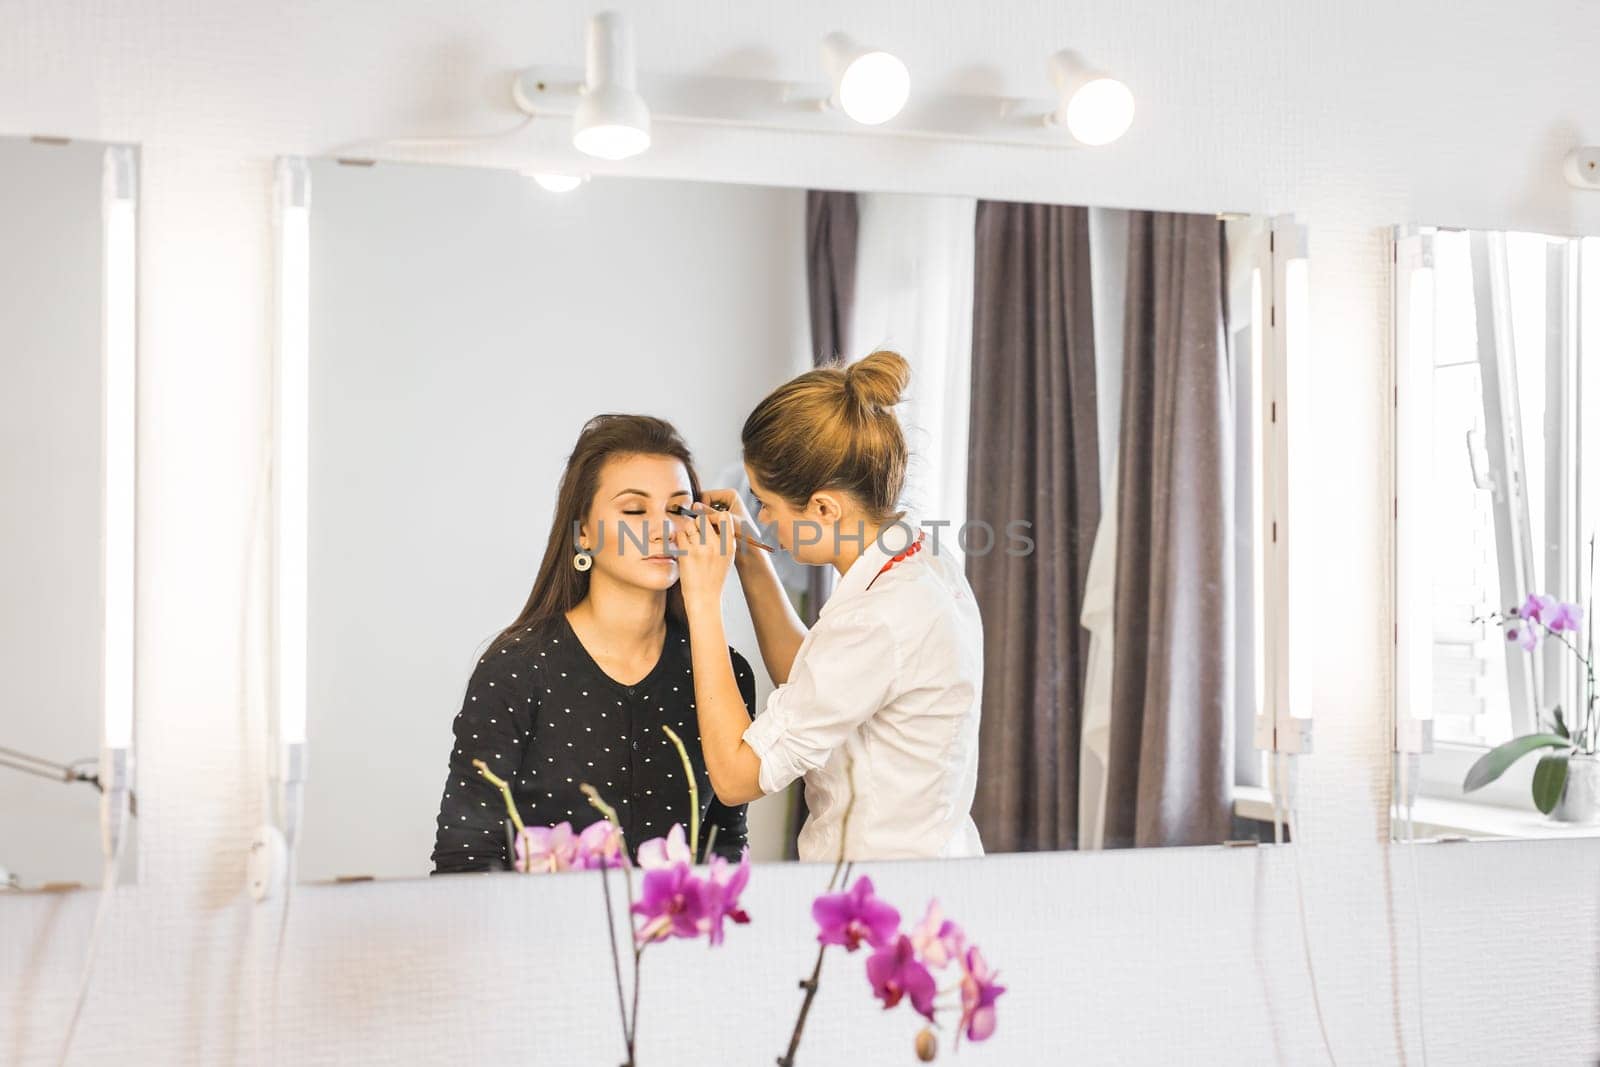 Make-up artist doing make up for young beautiful bride applying wedding make-up